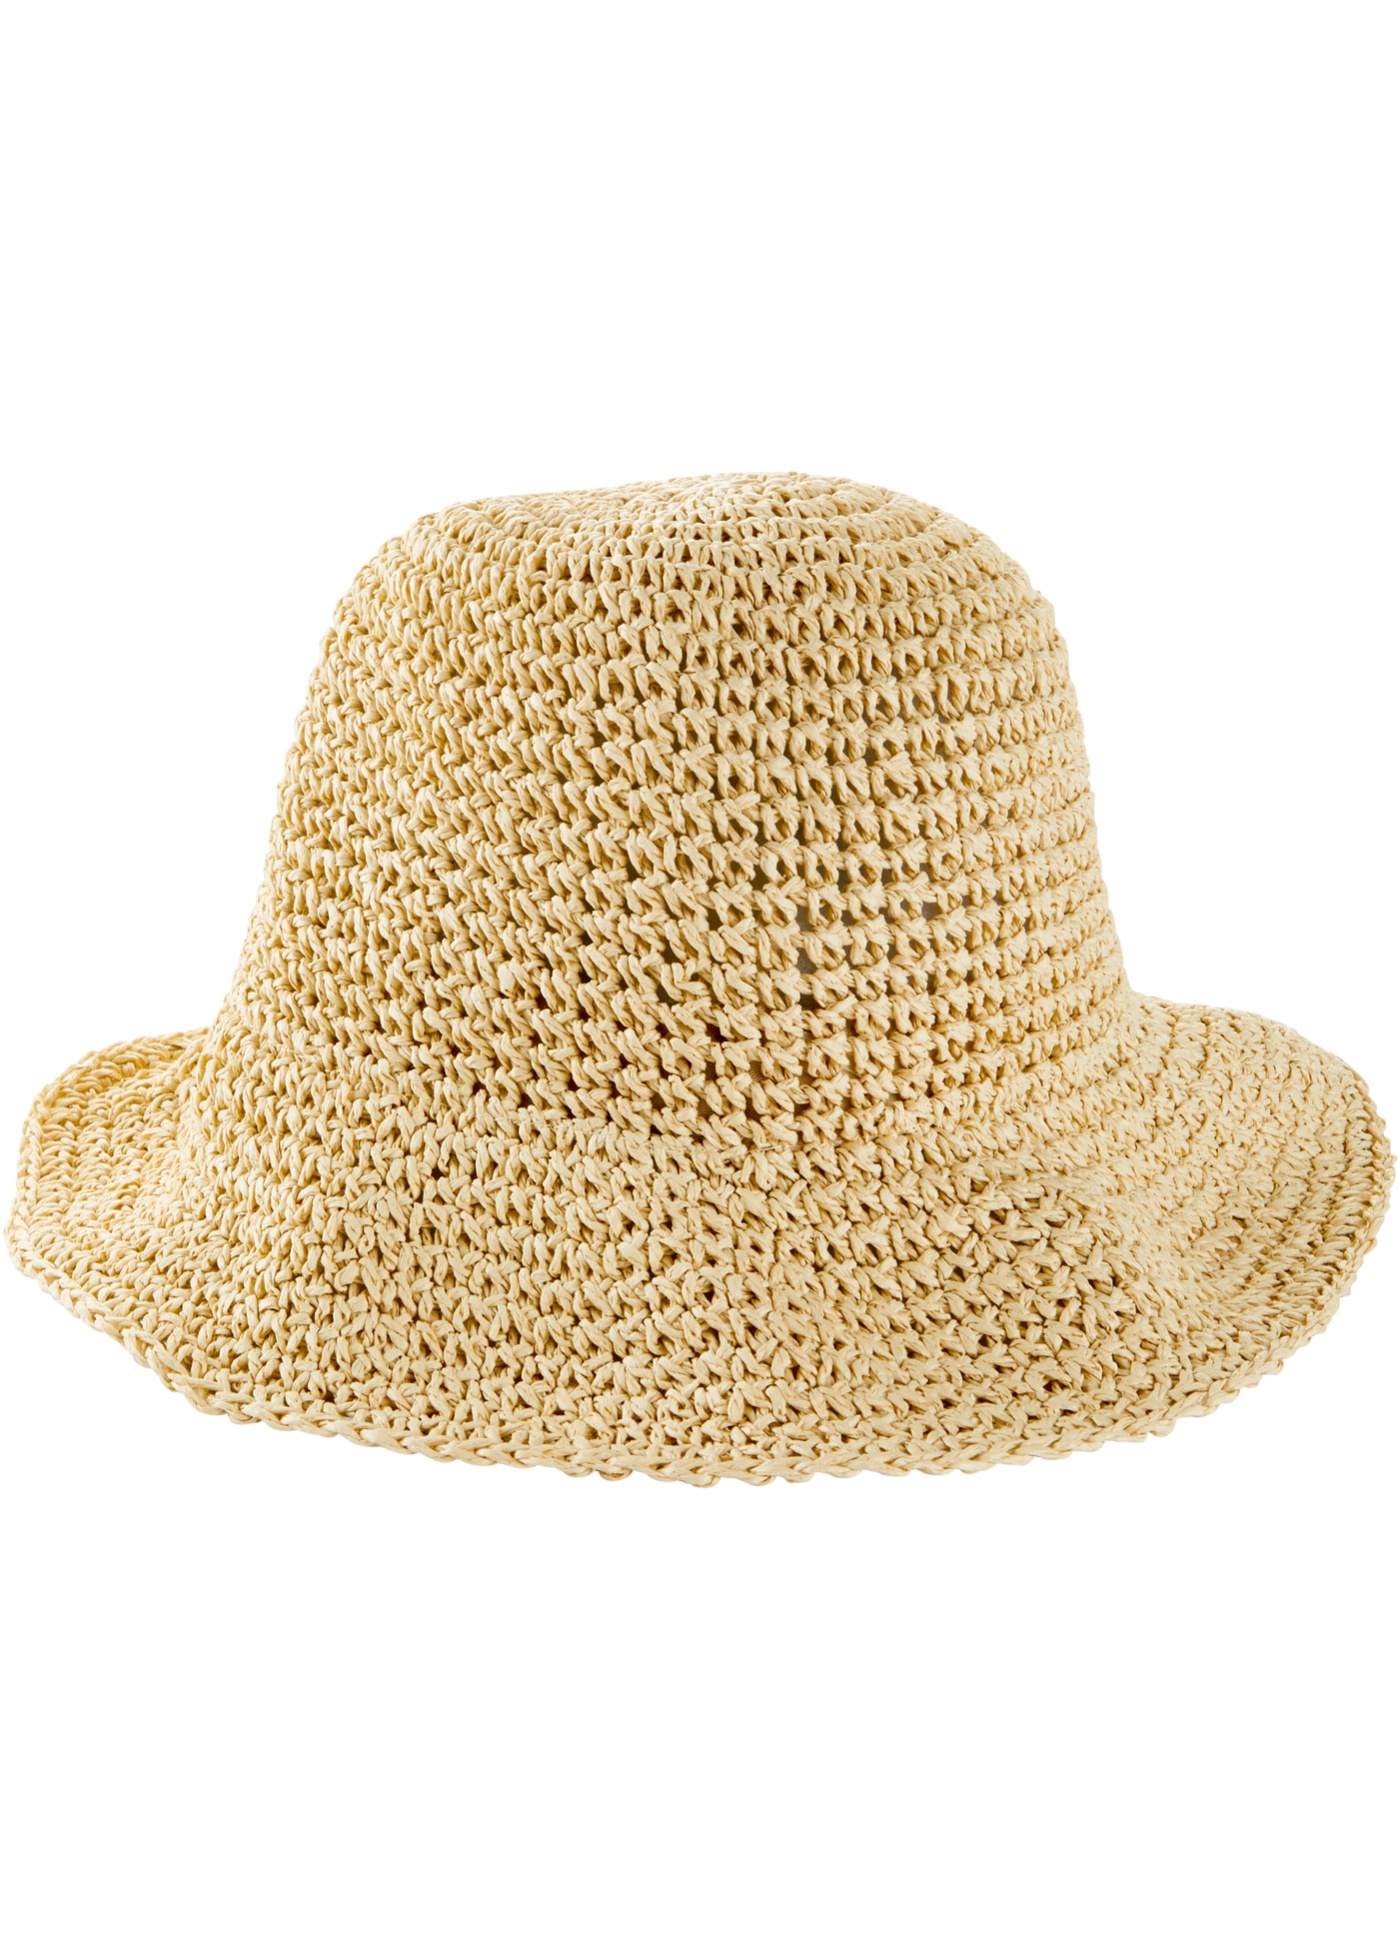 Stroh Bucket Hat